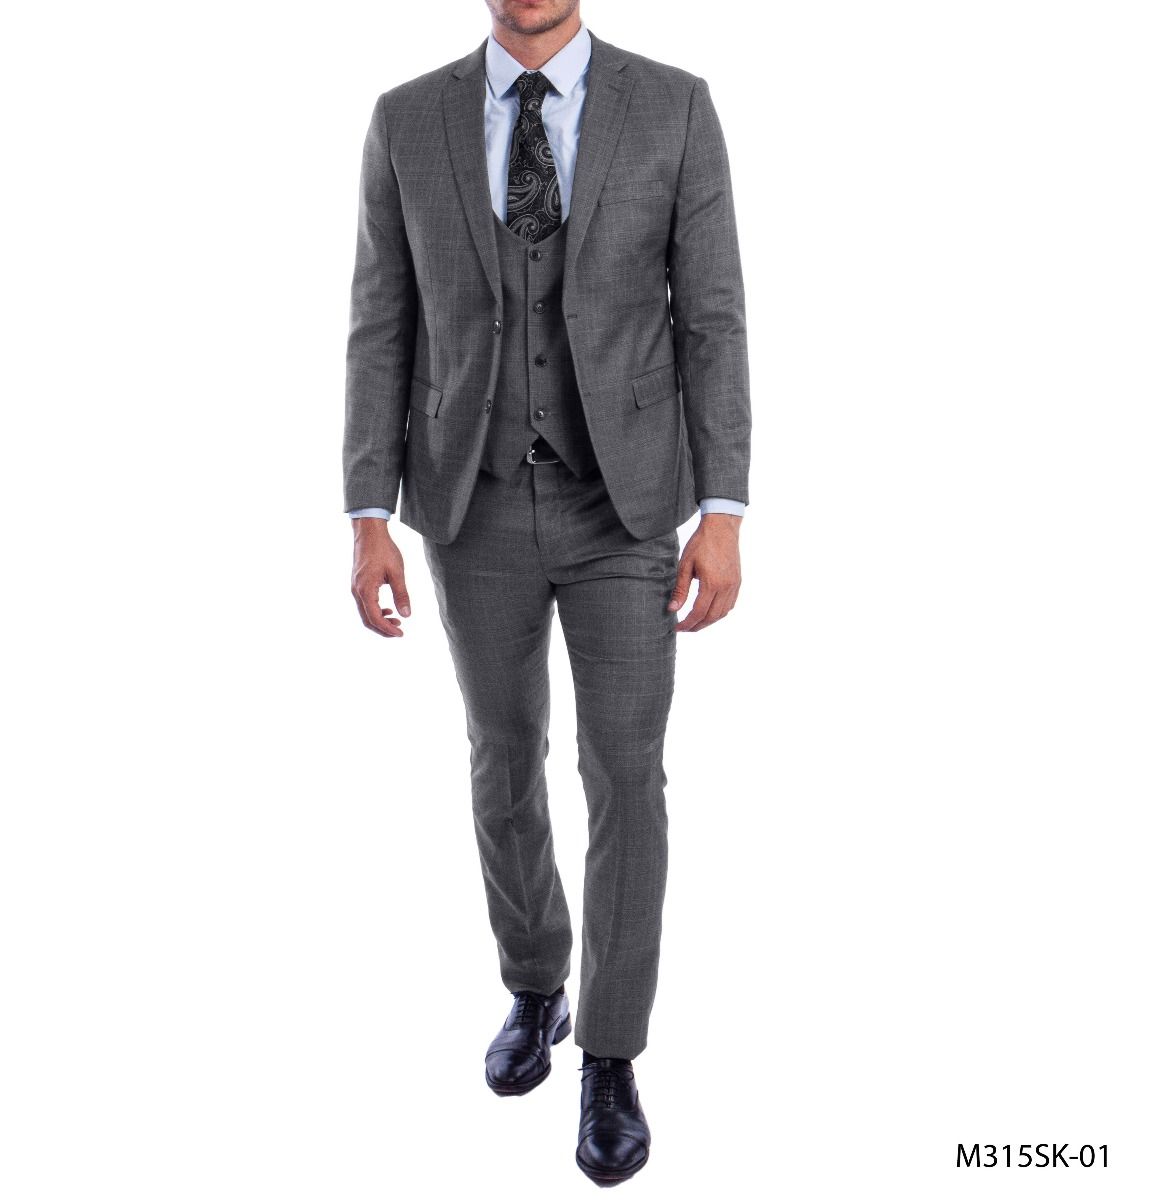 Sean Alexander Men's 3 Piece Executive Suit - U Vest